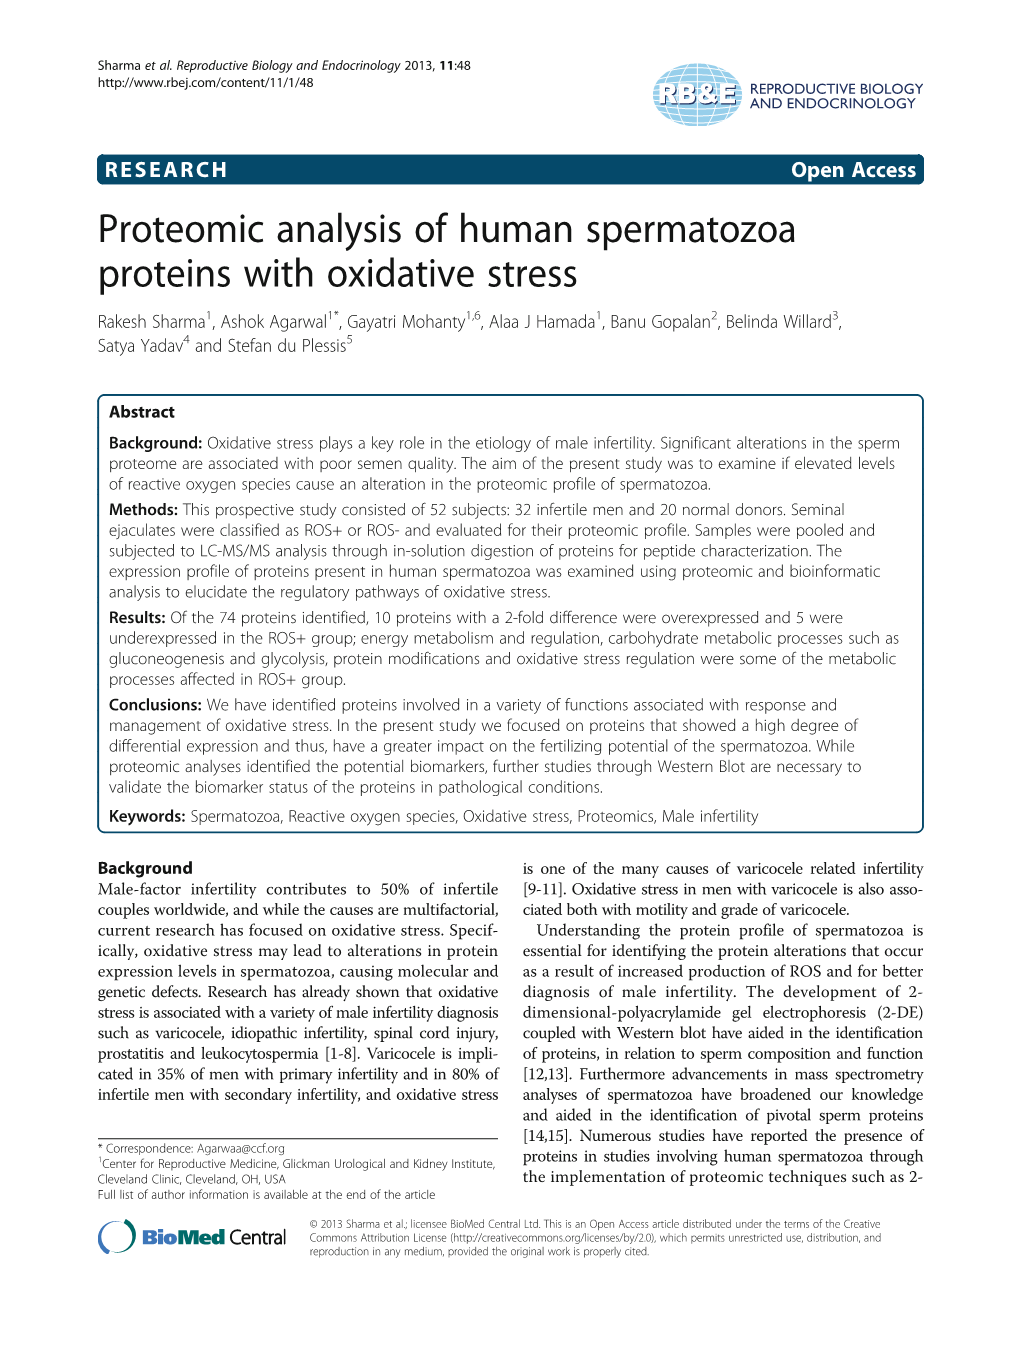 Proteomic Analysis of Human Spermatozoa Proteins with Oxidative